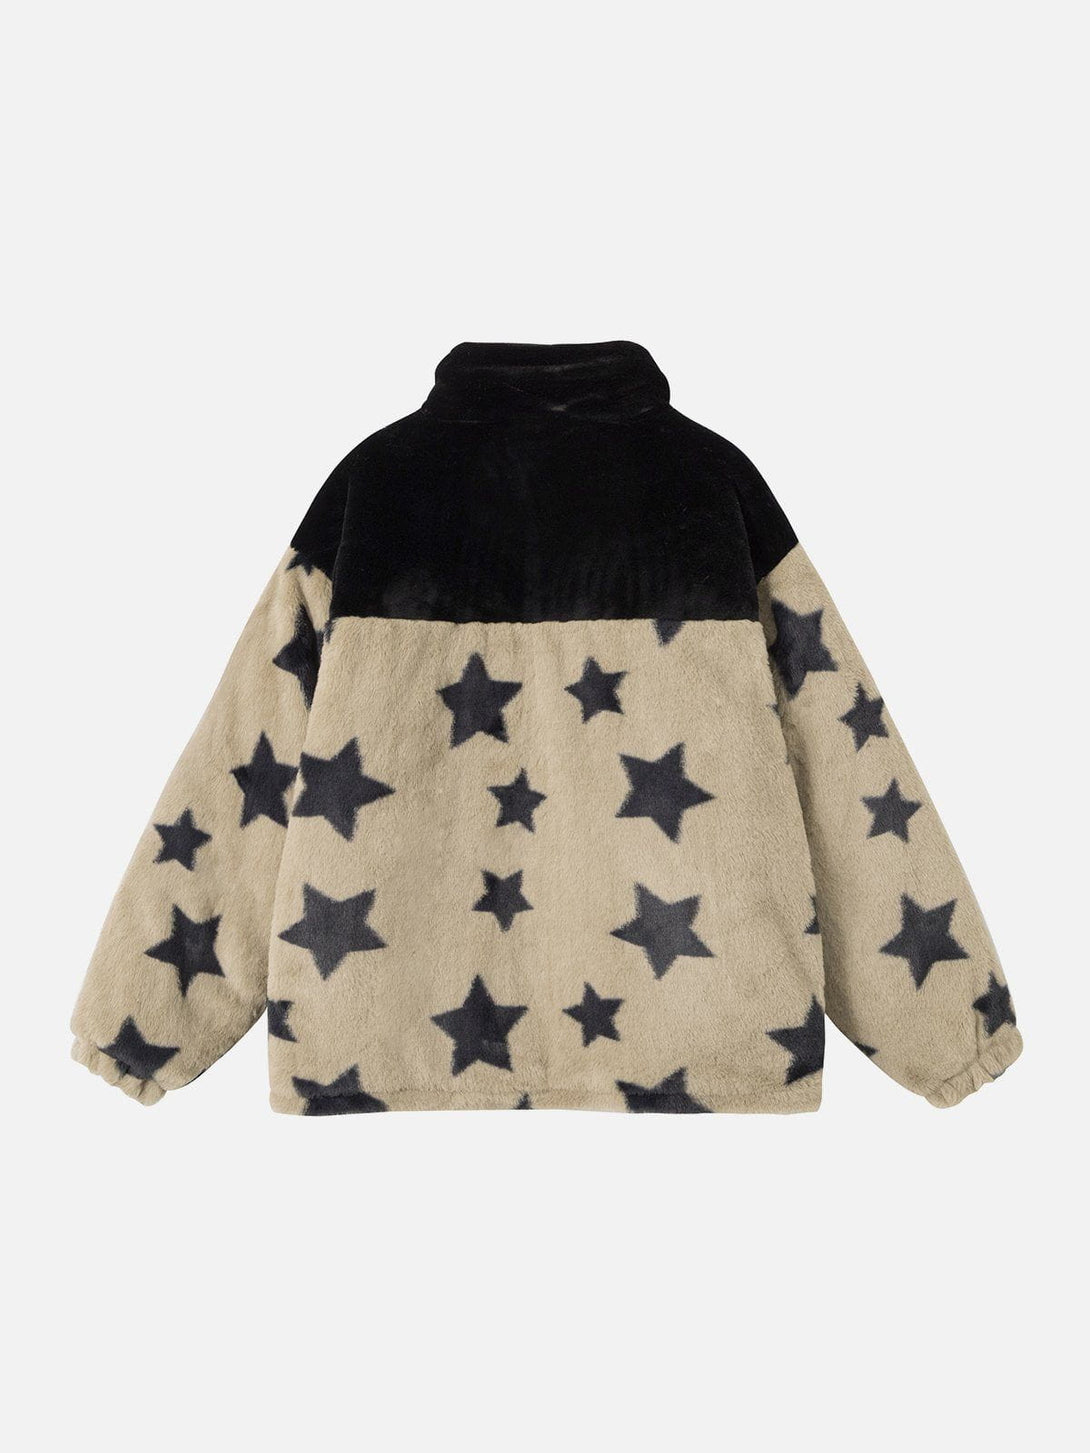 Levefly - Star Panel Sherpa Winter Coat - Streetwear Fashion - levefly.com